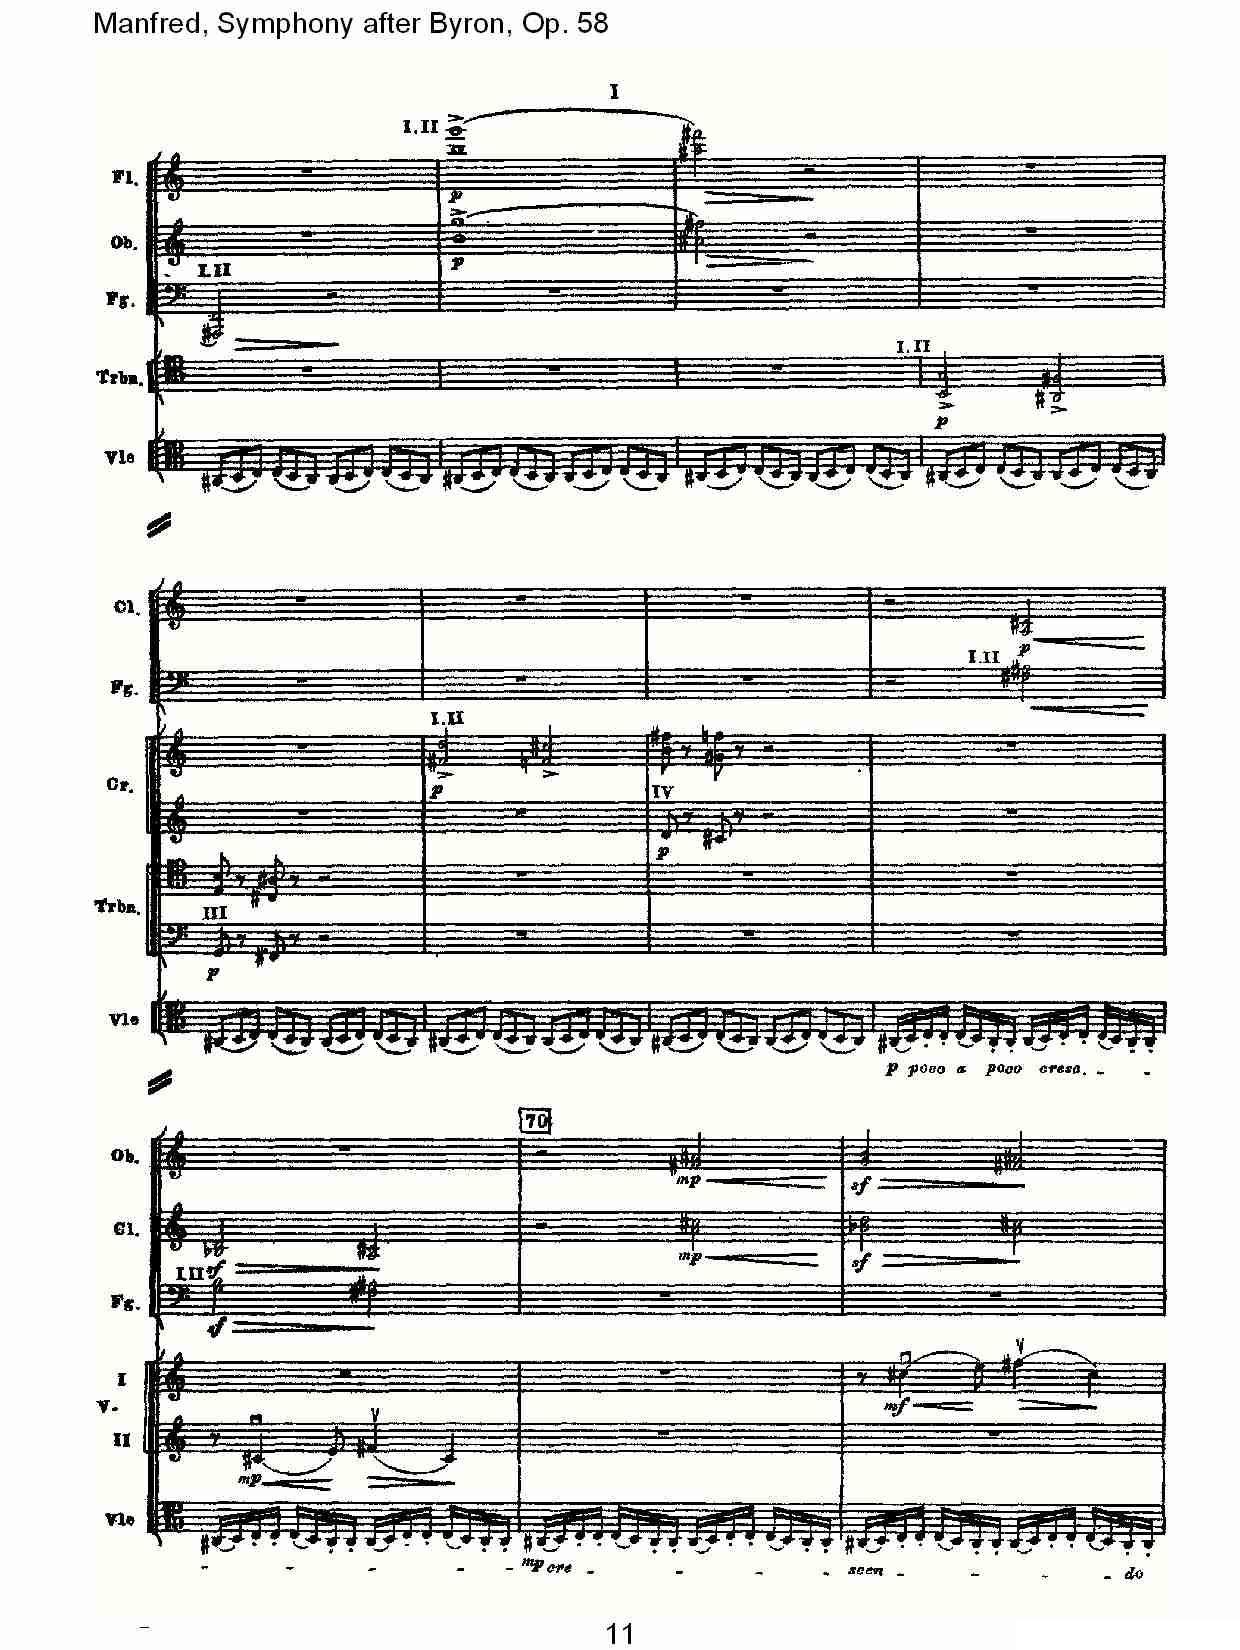 Manfred, Symphony after Byron, Op.58第一乐章（一）其它曲谱（图11）